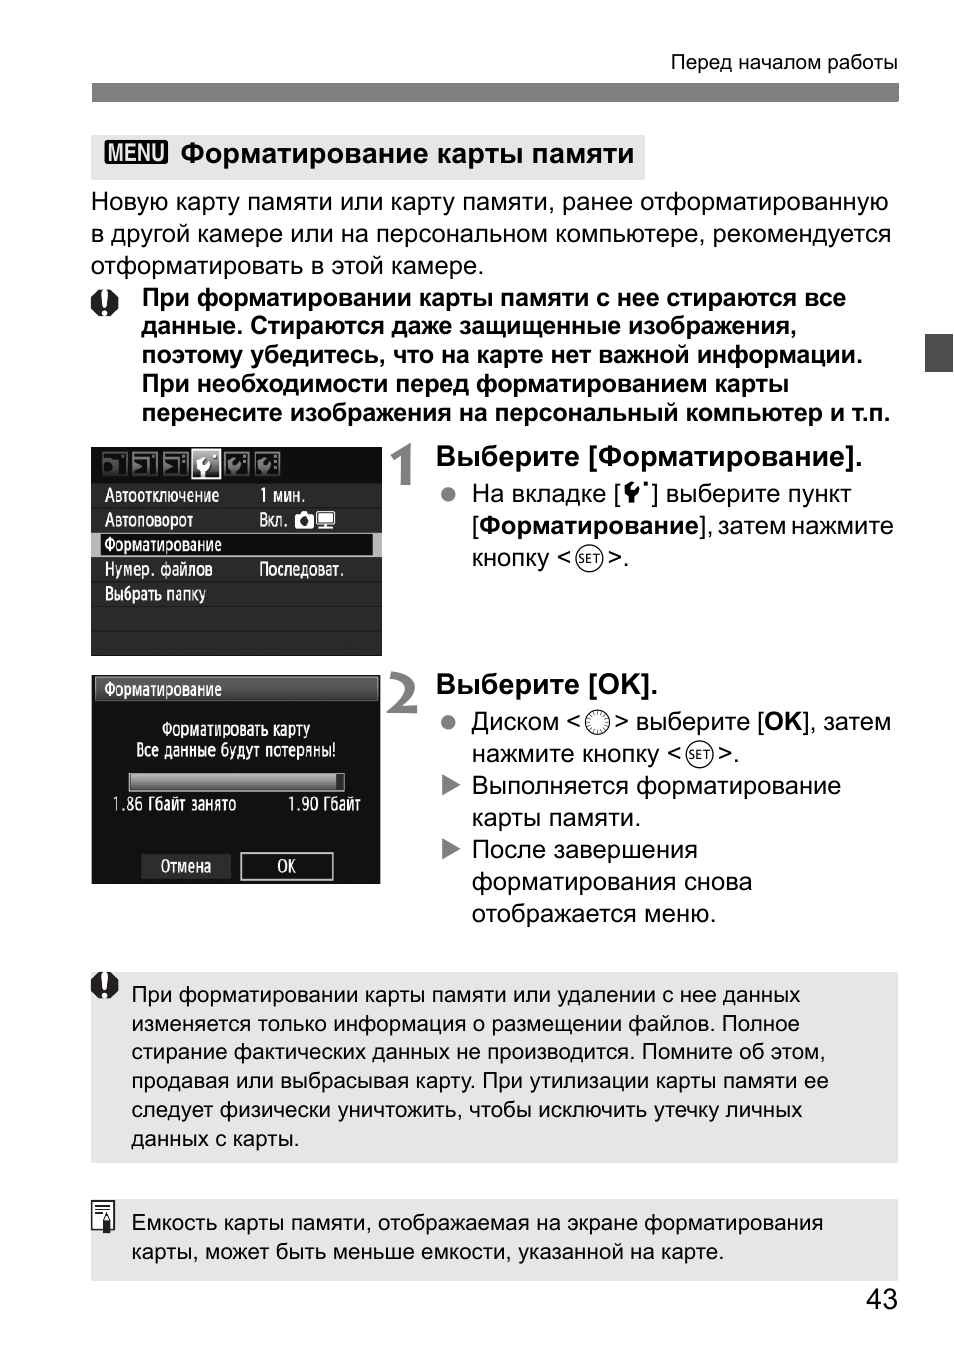 Инструкция по эксплуатации Canon EOS-1Ds Mark II | Страница 43 / 252